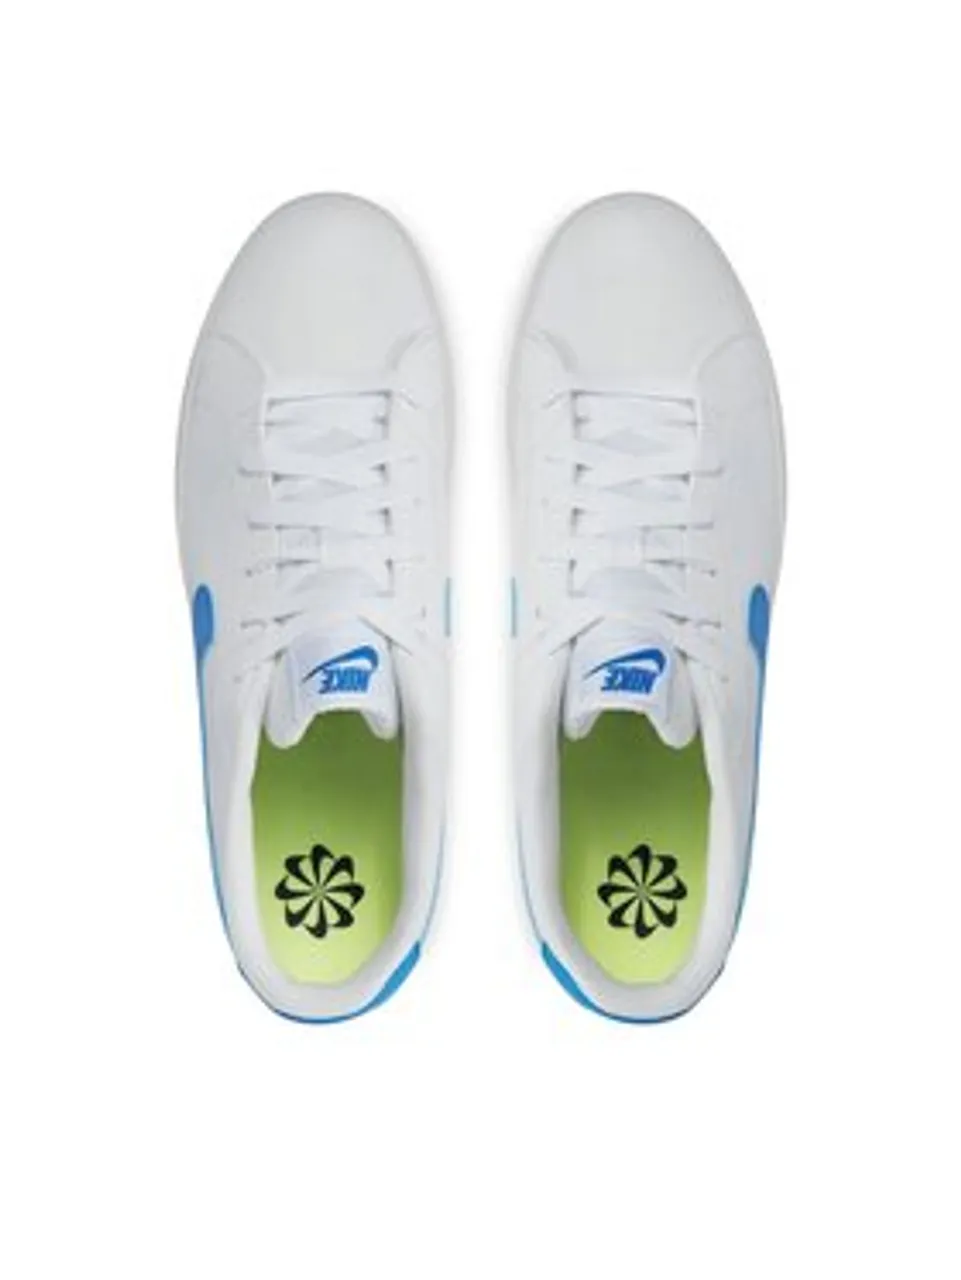 Nike Sneakers Court Royale 2 Nn DH3160 103 Weiß